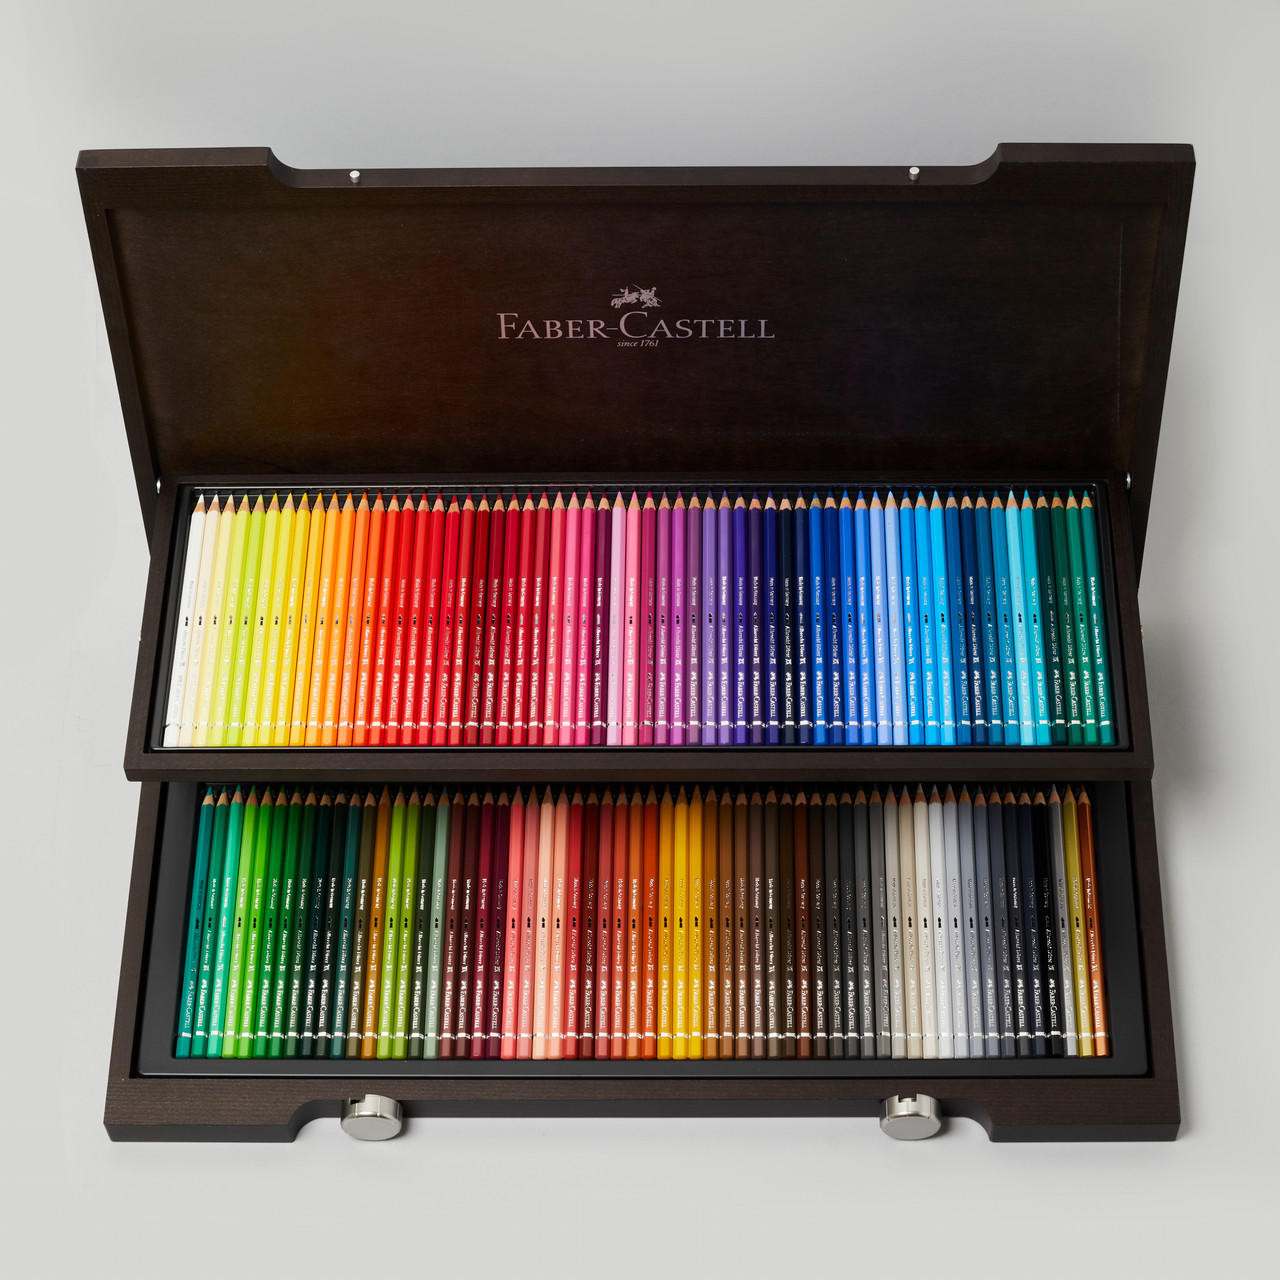 Faber-Castell Albrecht Durer Watercolor Pencil Set - Set of 120, Wood Box